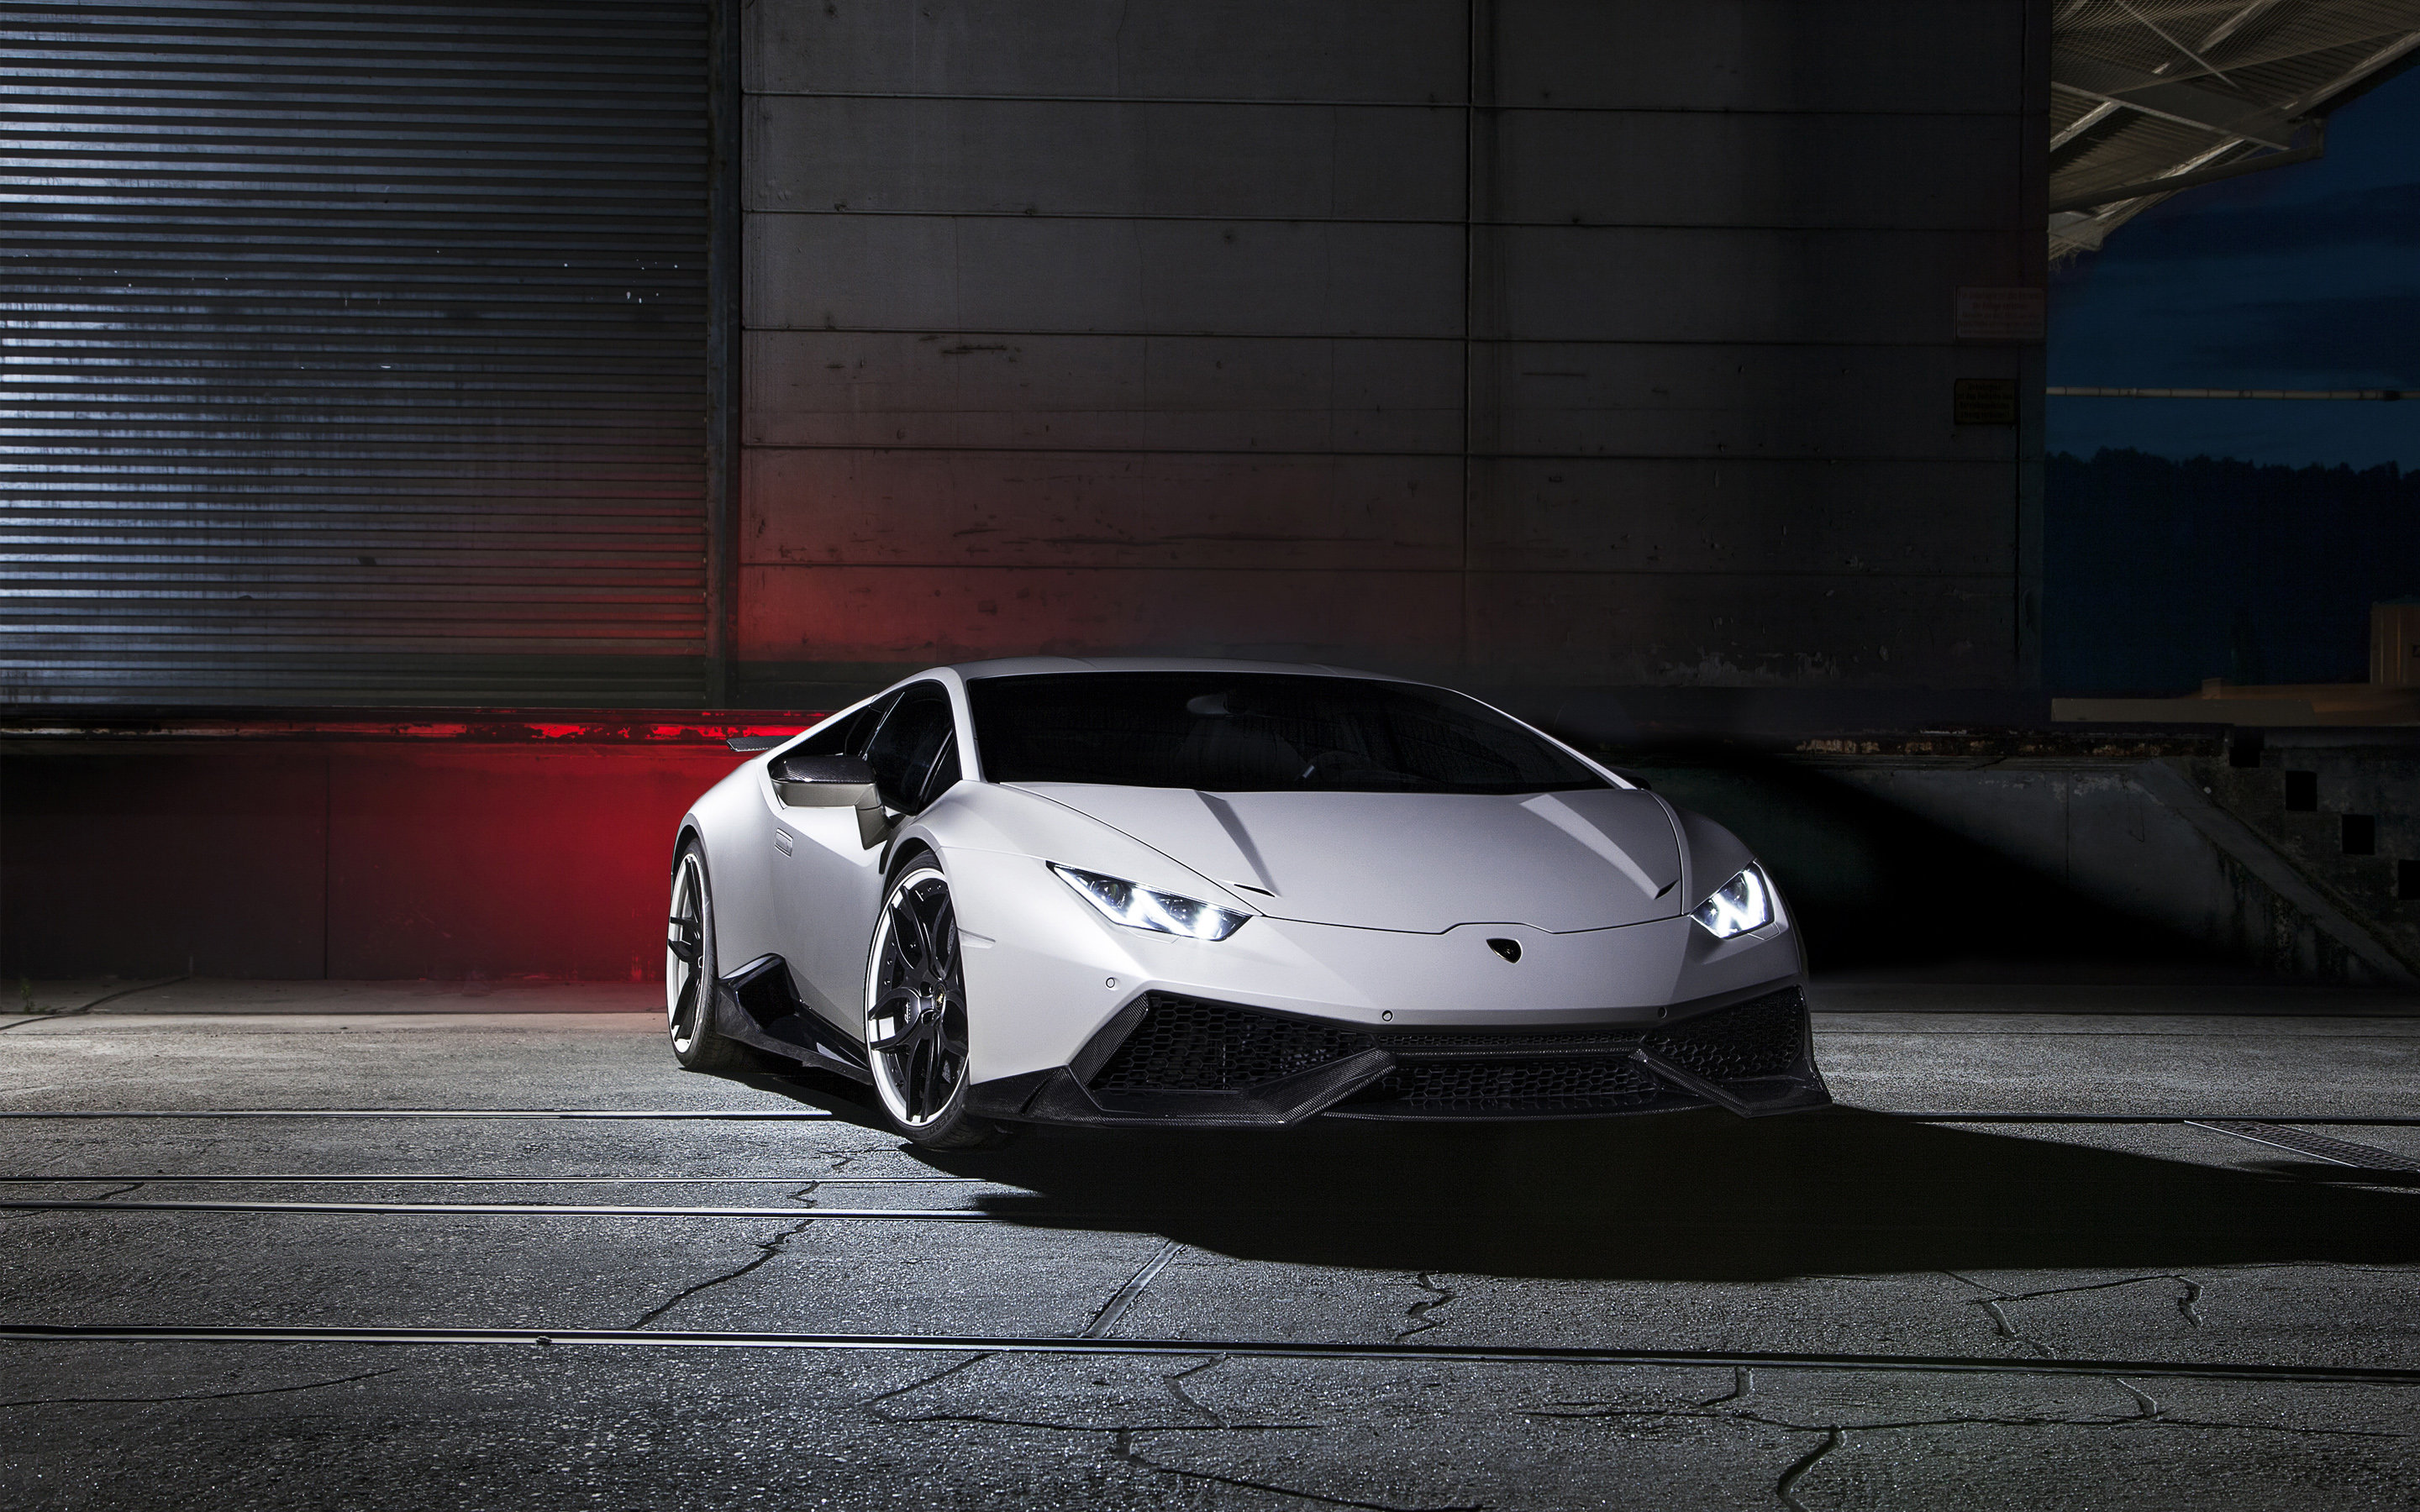 Best Lamborghini Huracan background ID:339787 for High Resolution hd 2880x1800 desktop